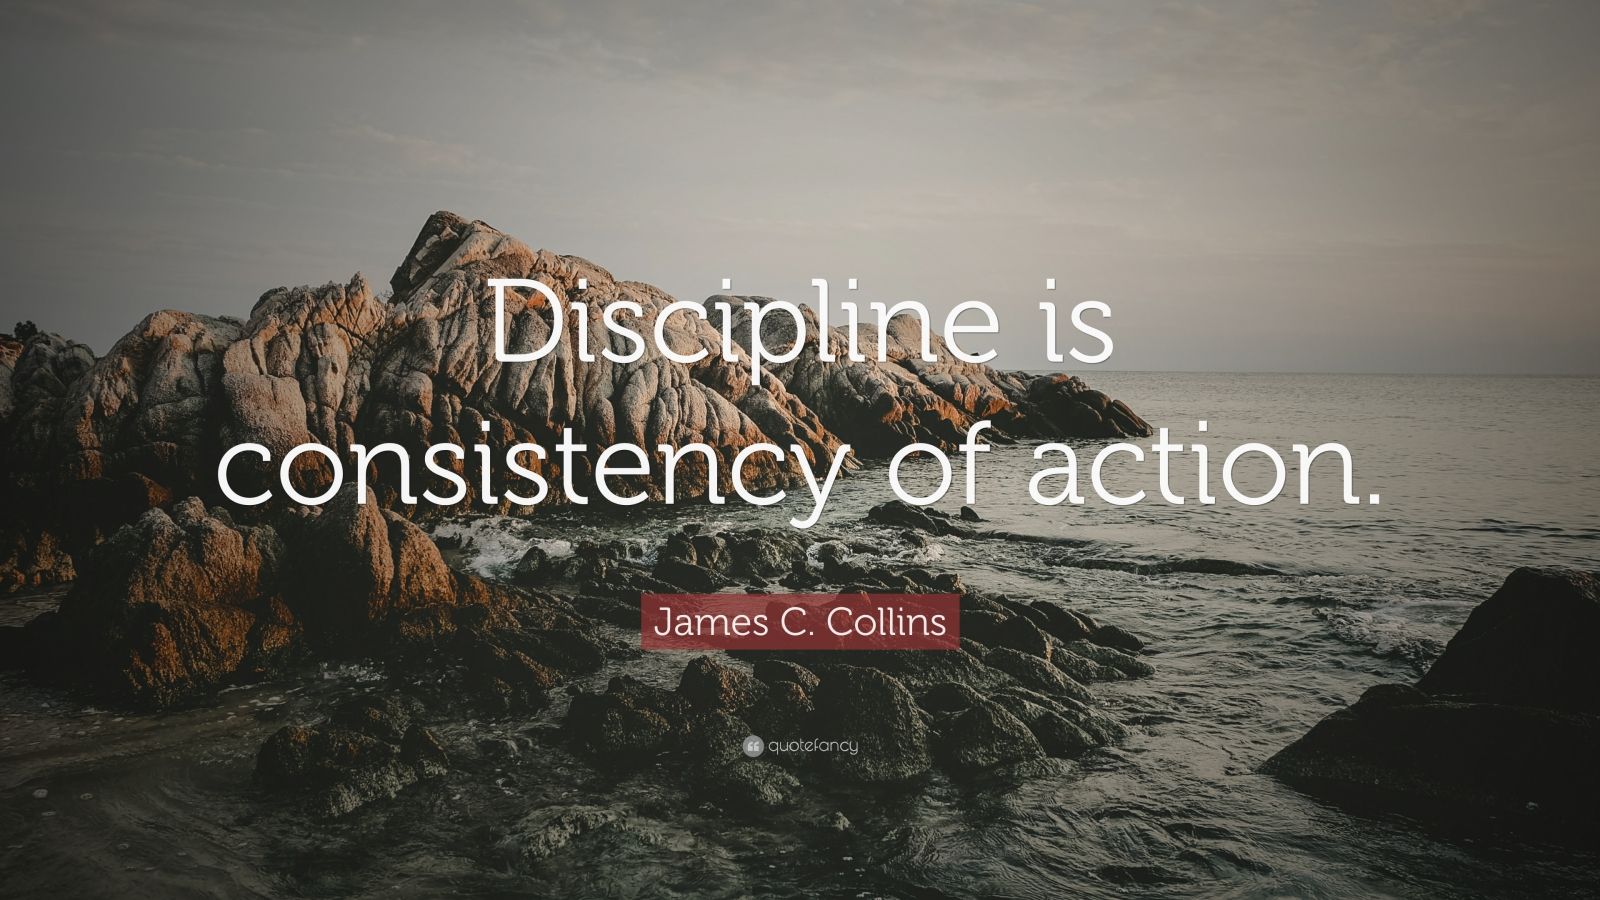 James C. Collins Quote: “Discipline is consistency of action.” (7 ...